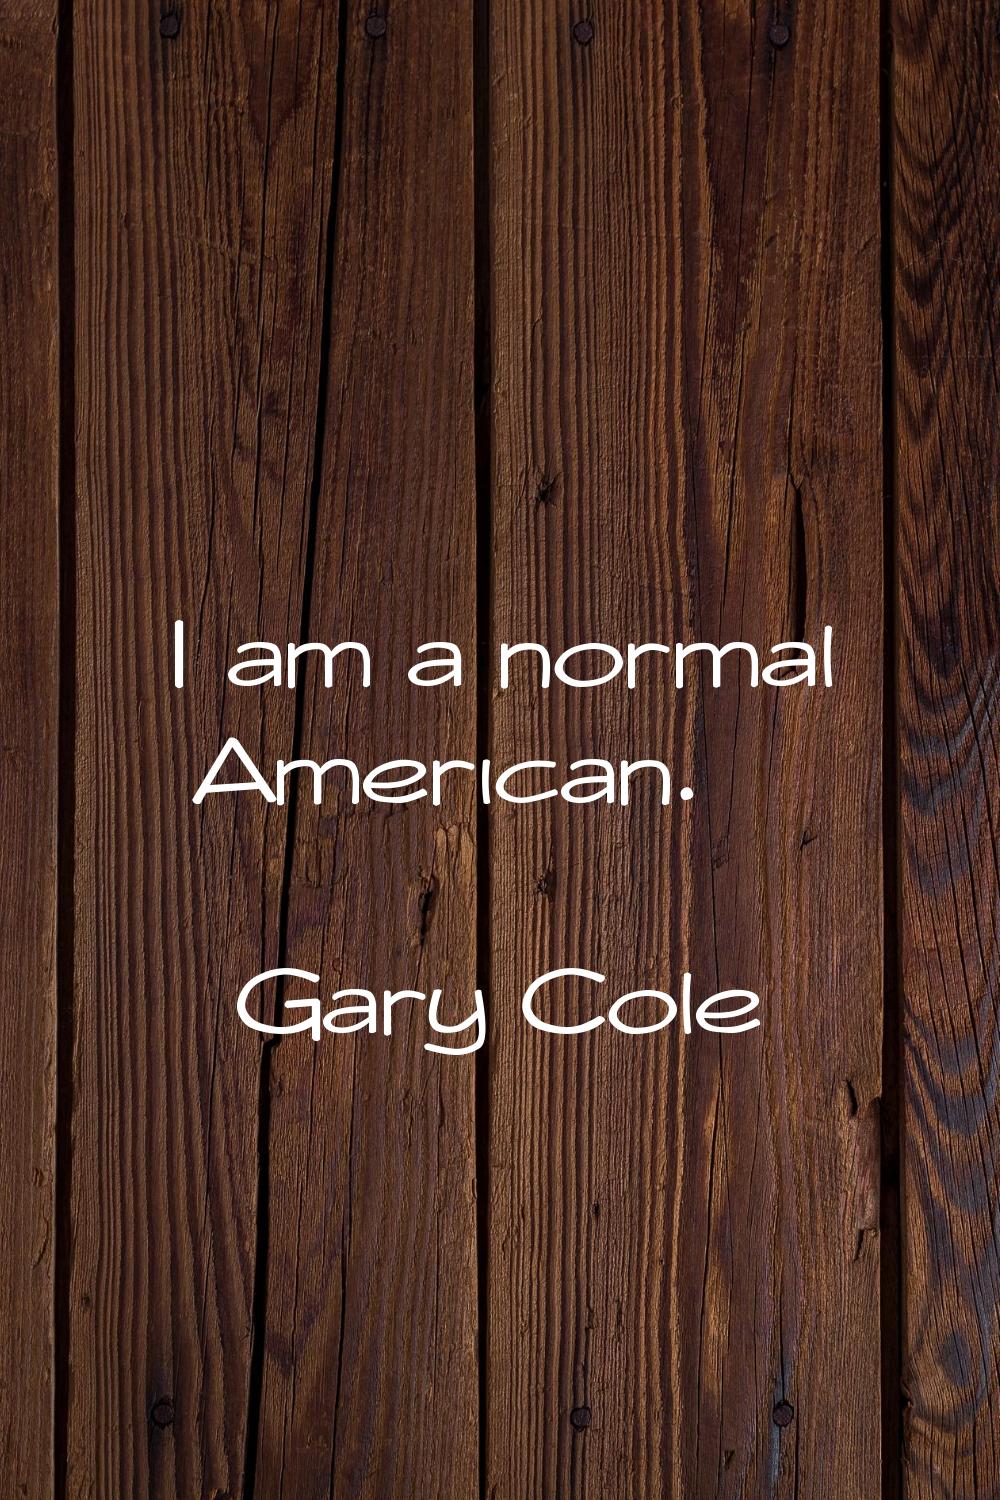 I am a normal American.